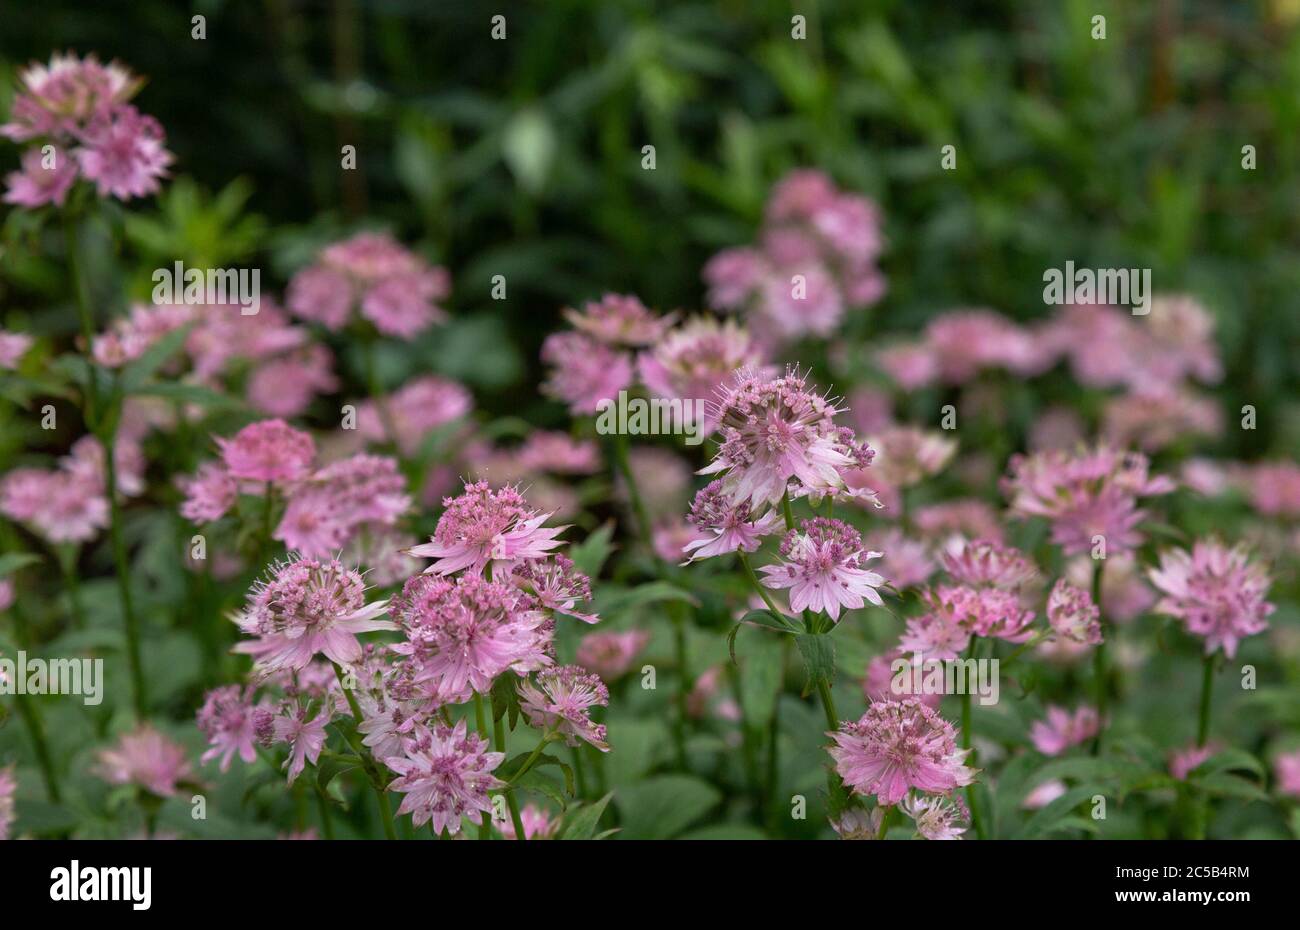 Pink Astrantia flowers in full bloom. Stock Photo